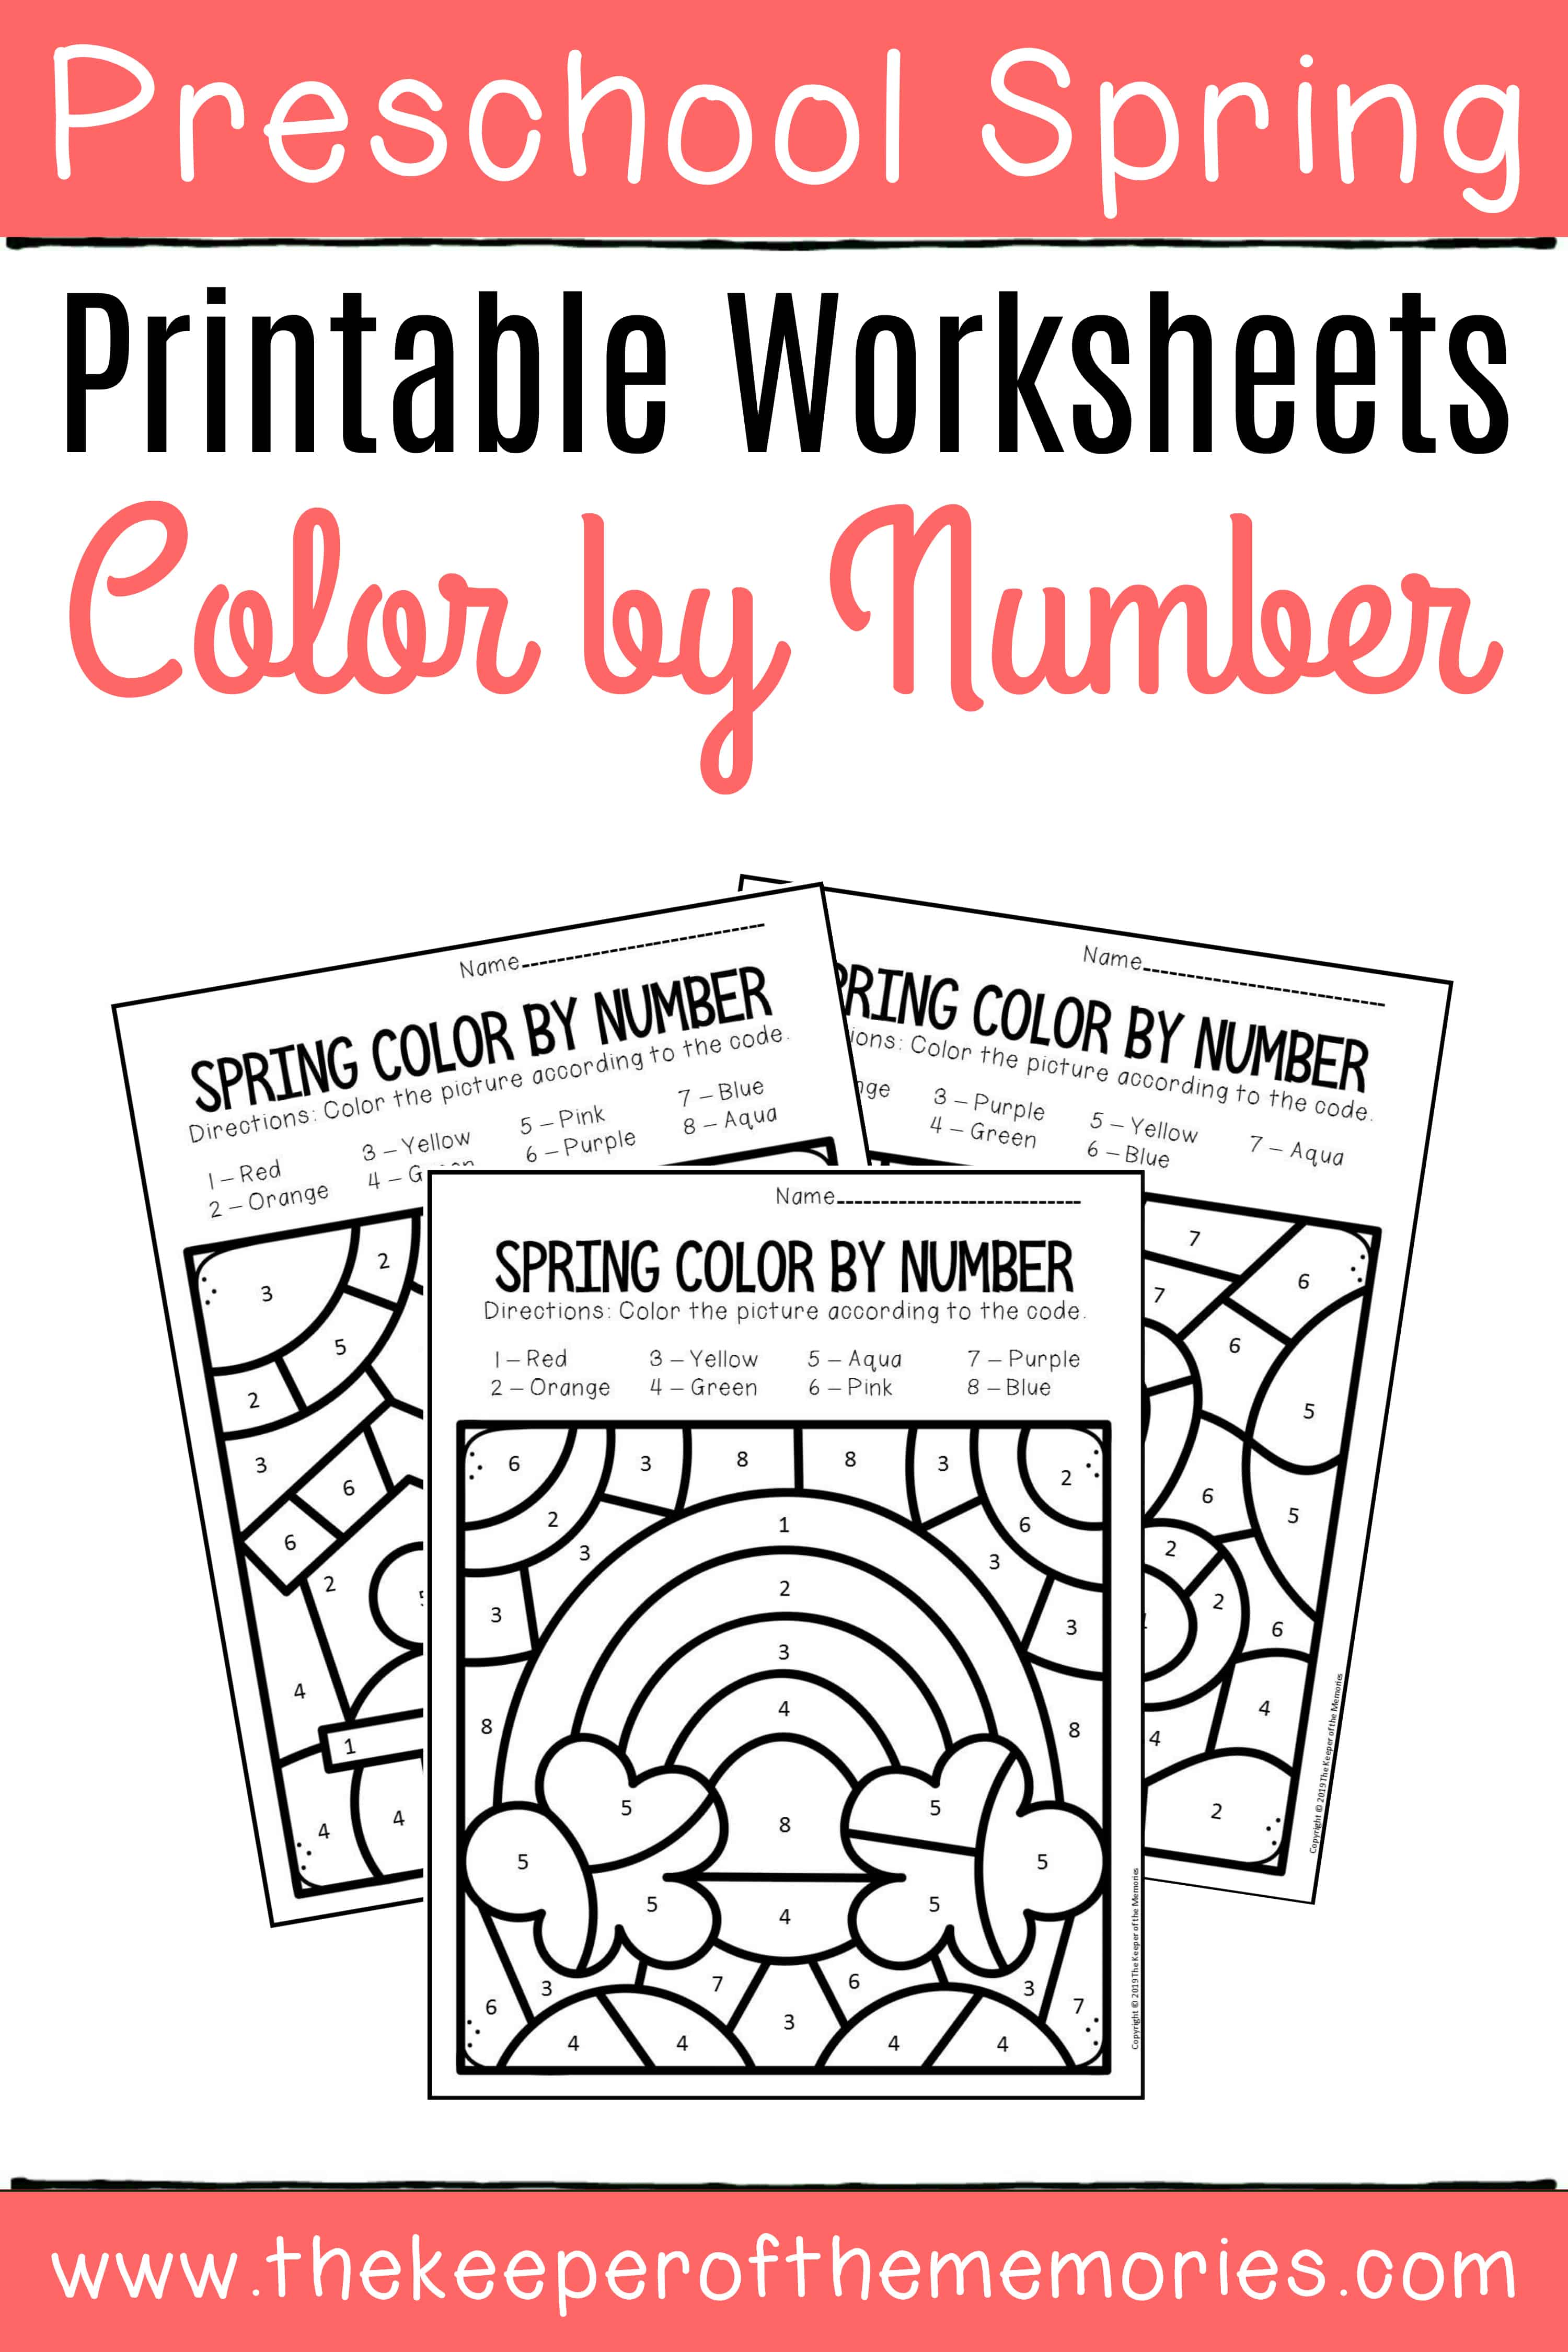 Color by number spring preschool worksheets